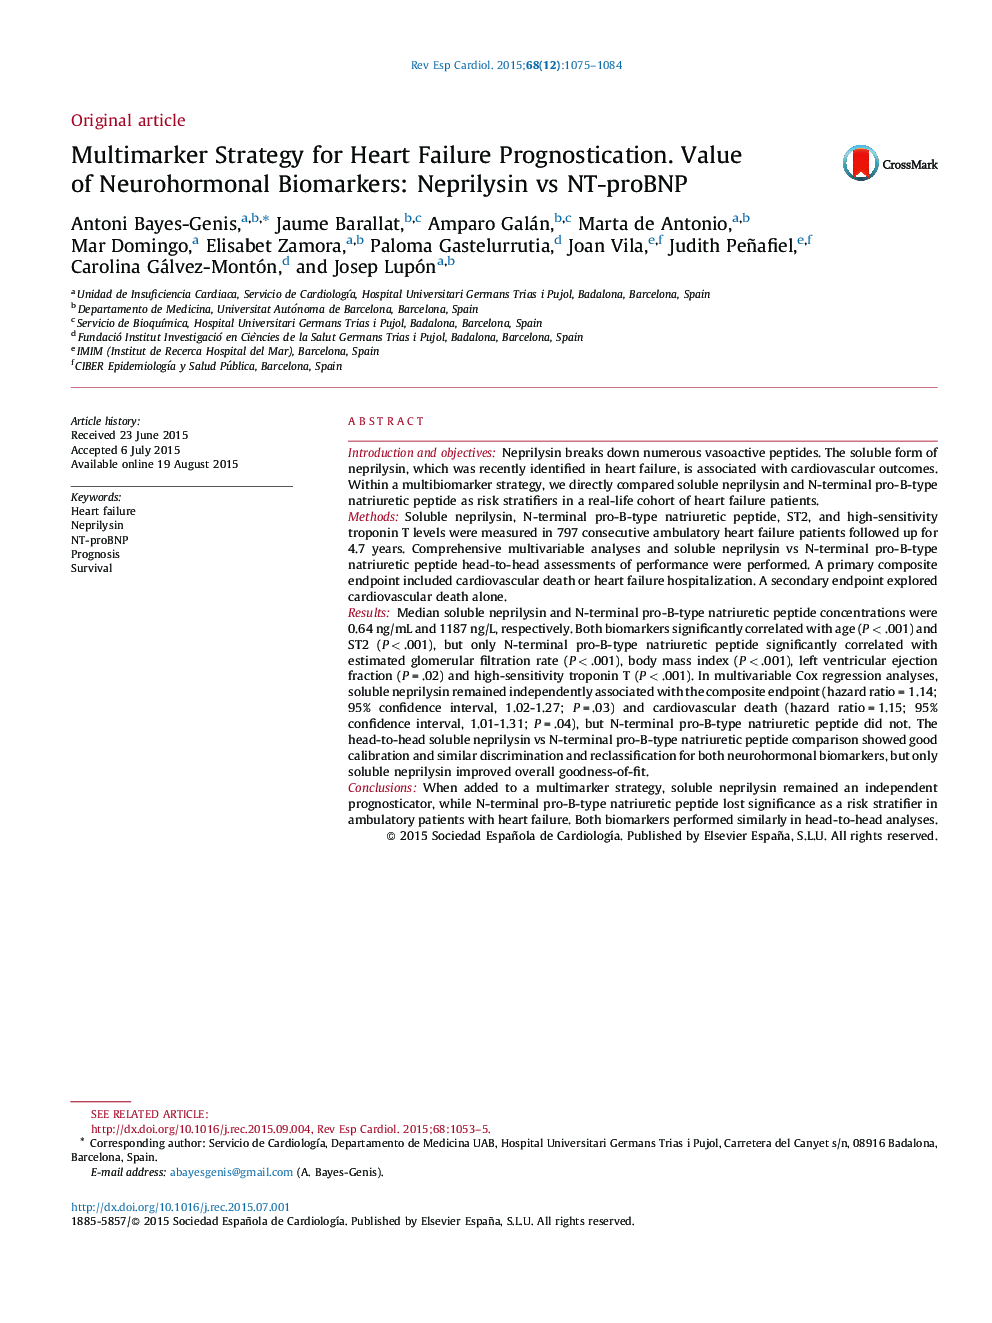 Multimarker Strategy for Heart Failure Prognostication. Value of Neurohormonal Biomarkers: Neprilysin vs NT-proBNP